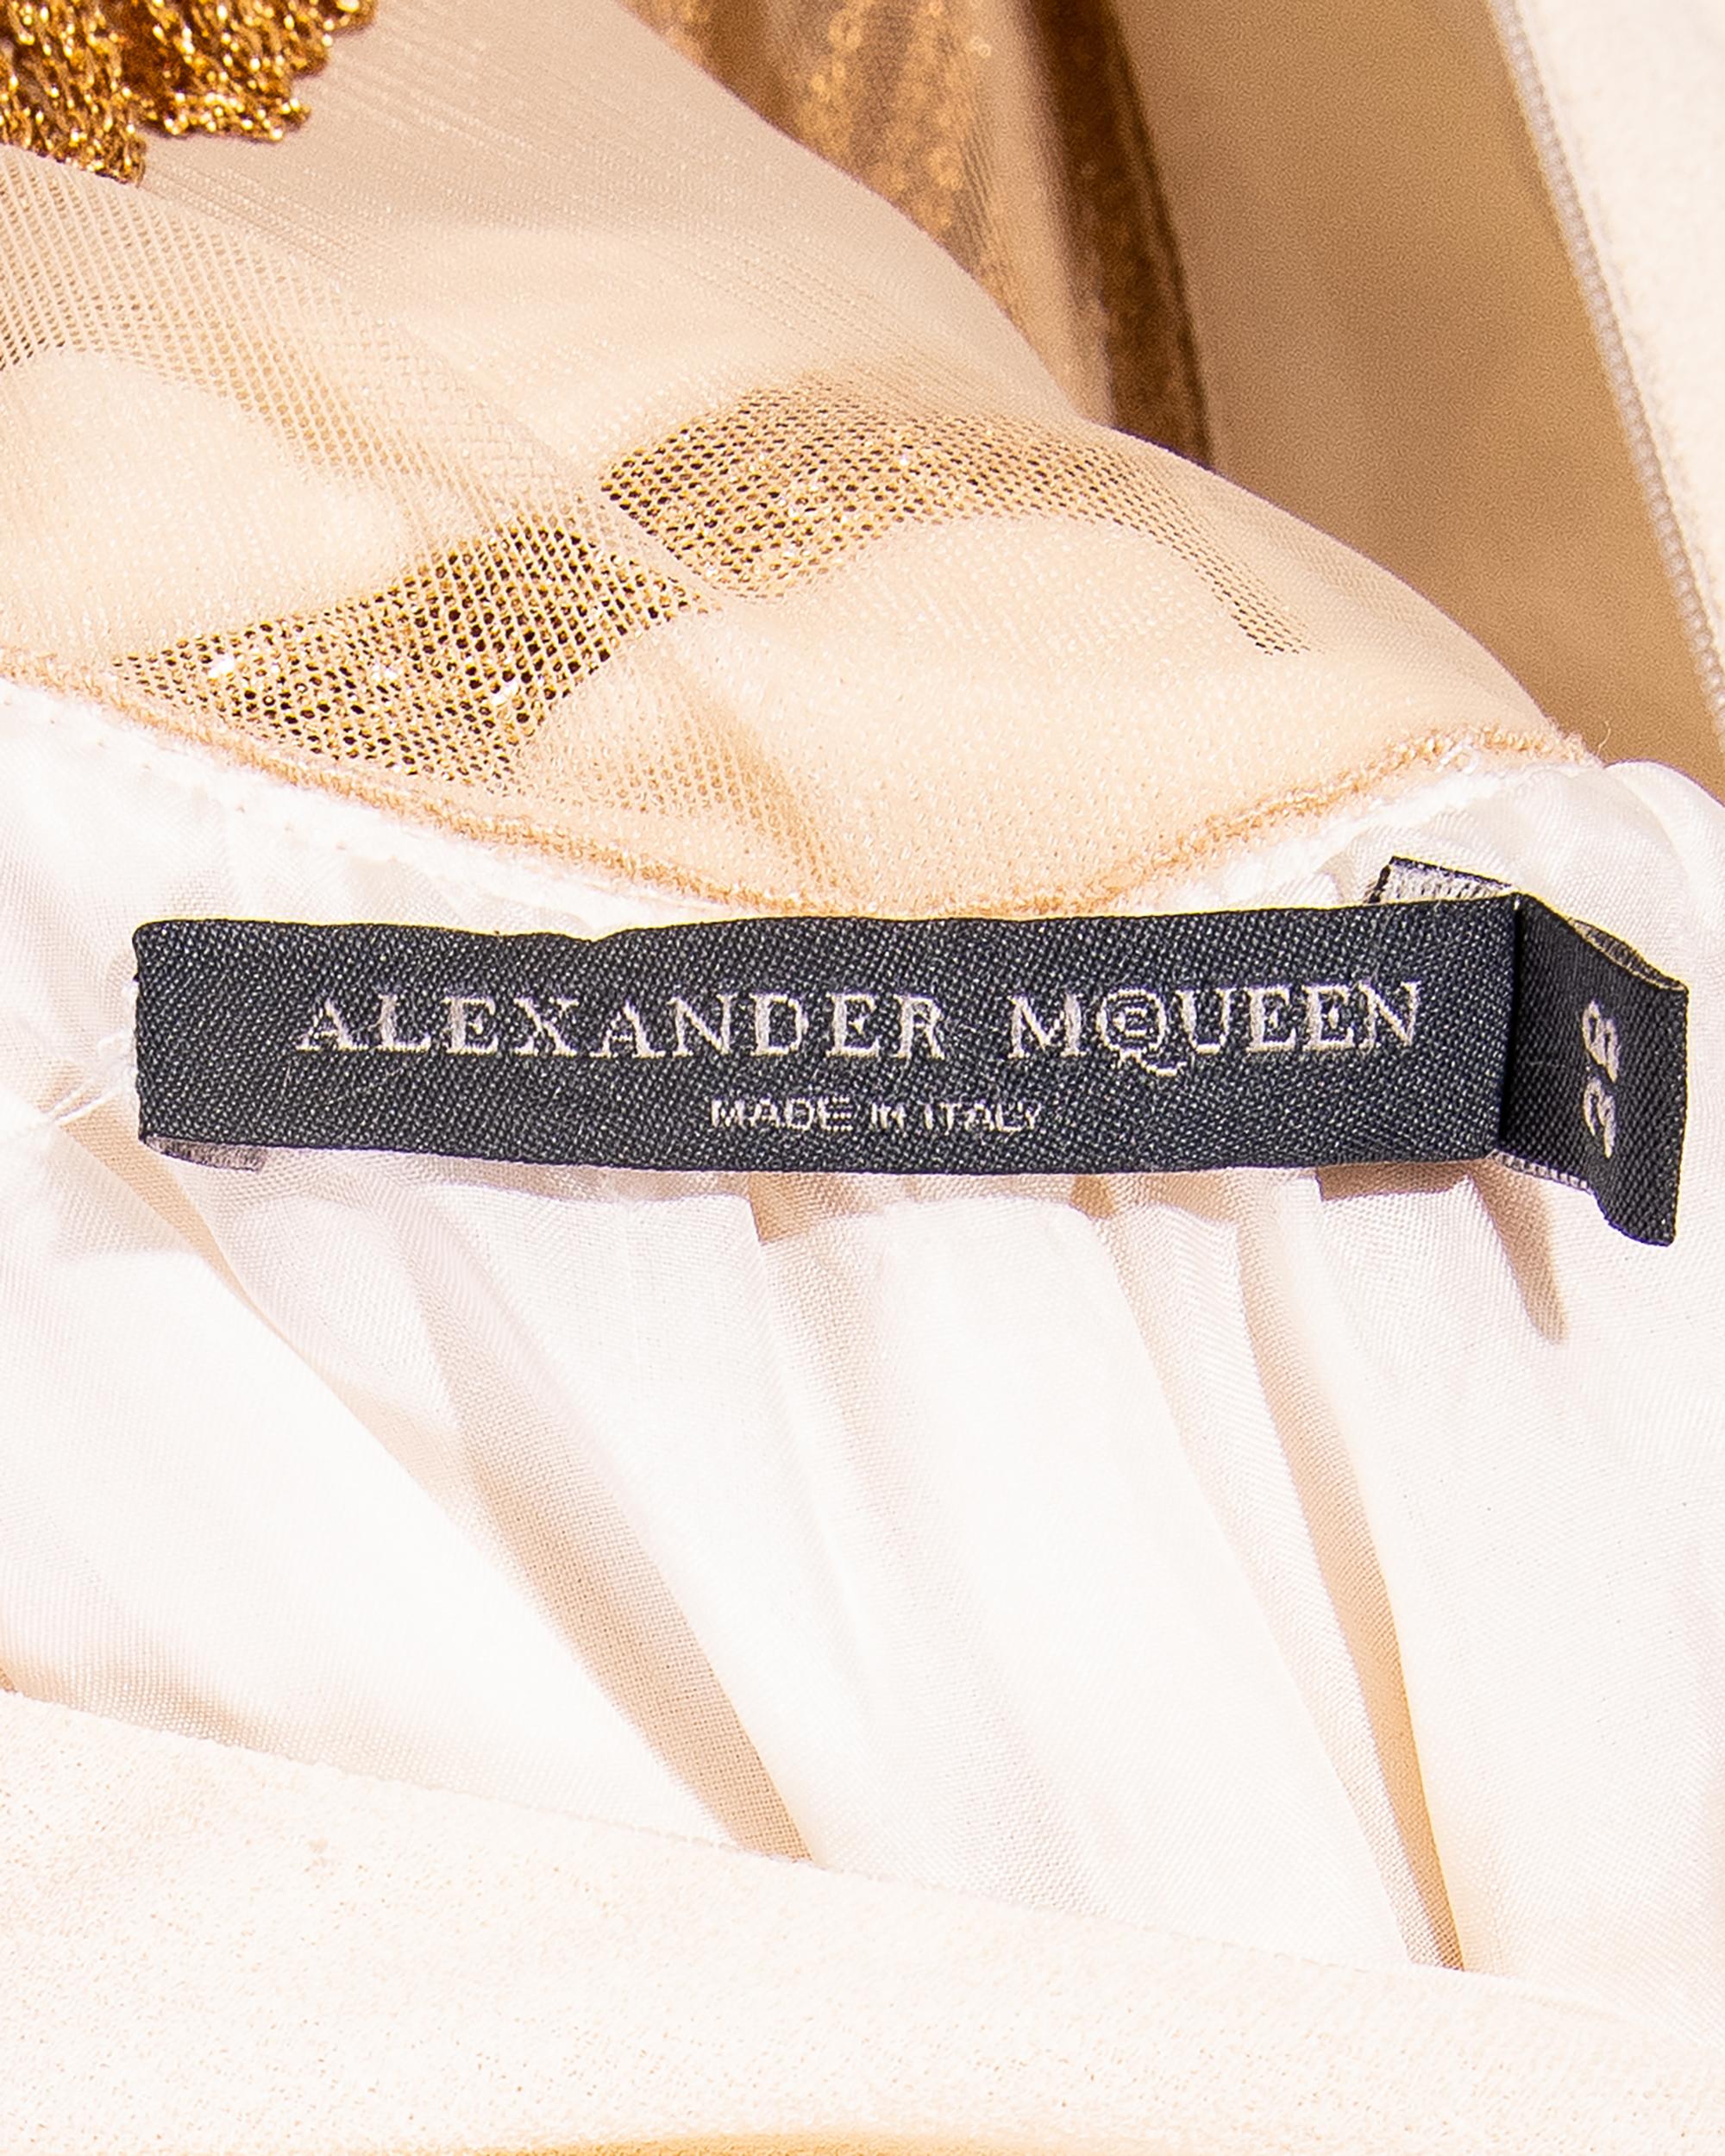 S/S 2006 Alexander McQueen Gold Chain White Gown 3